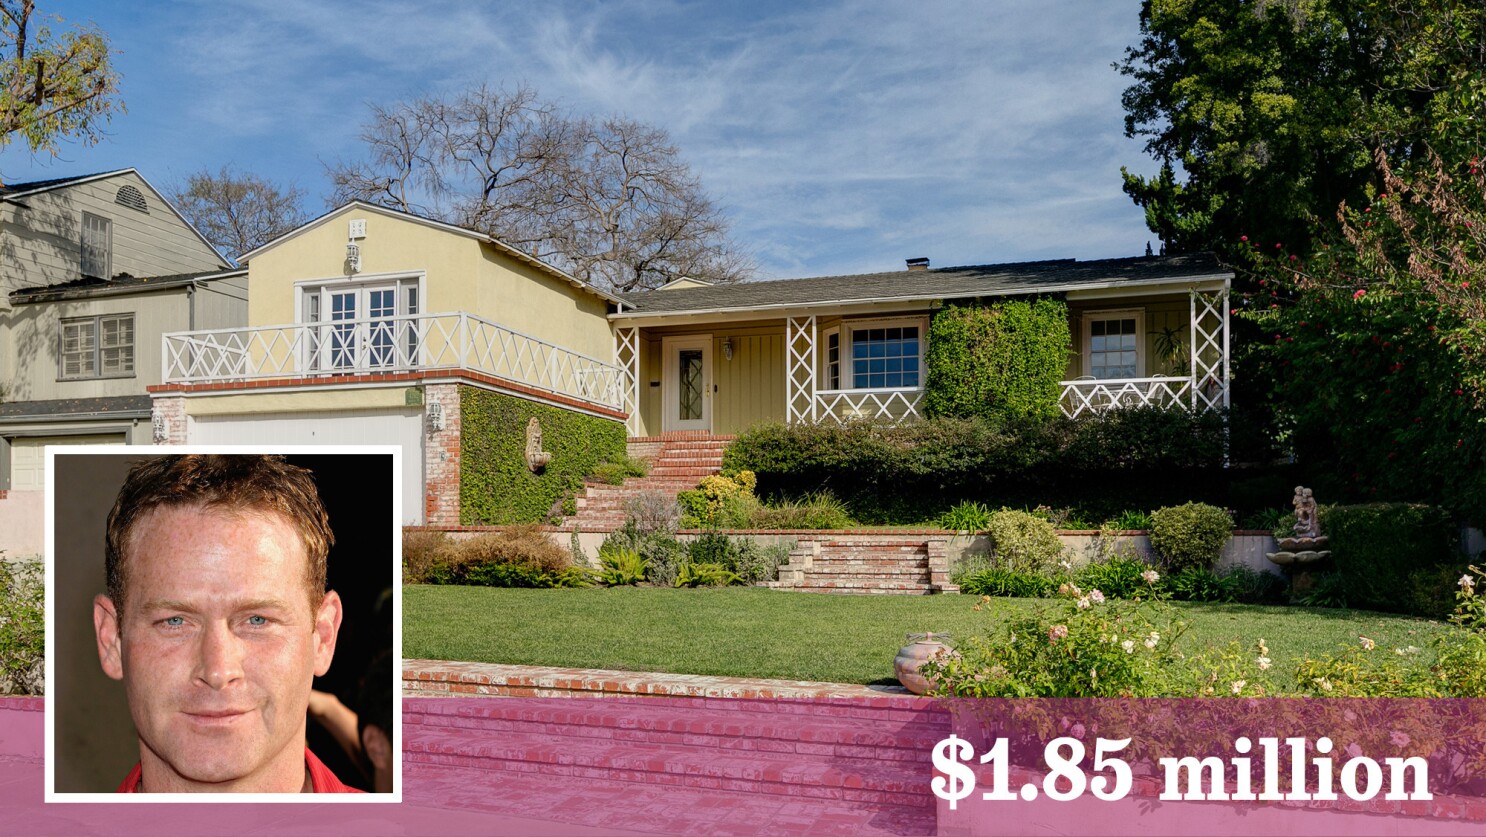 Foto: casa/residencia de Max Martini en Los Angeles, California, United States